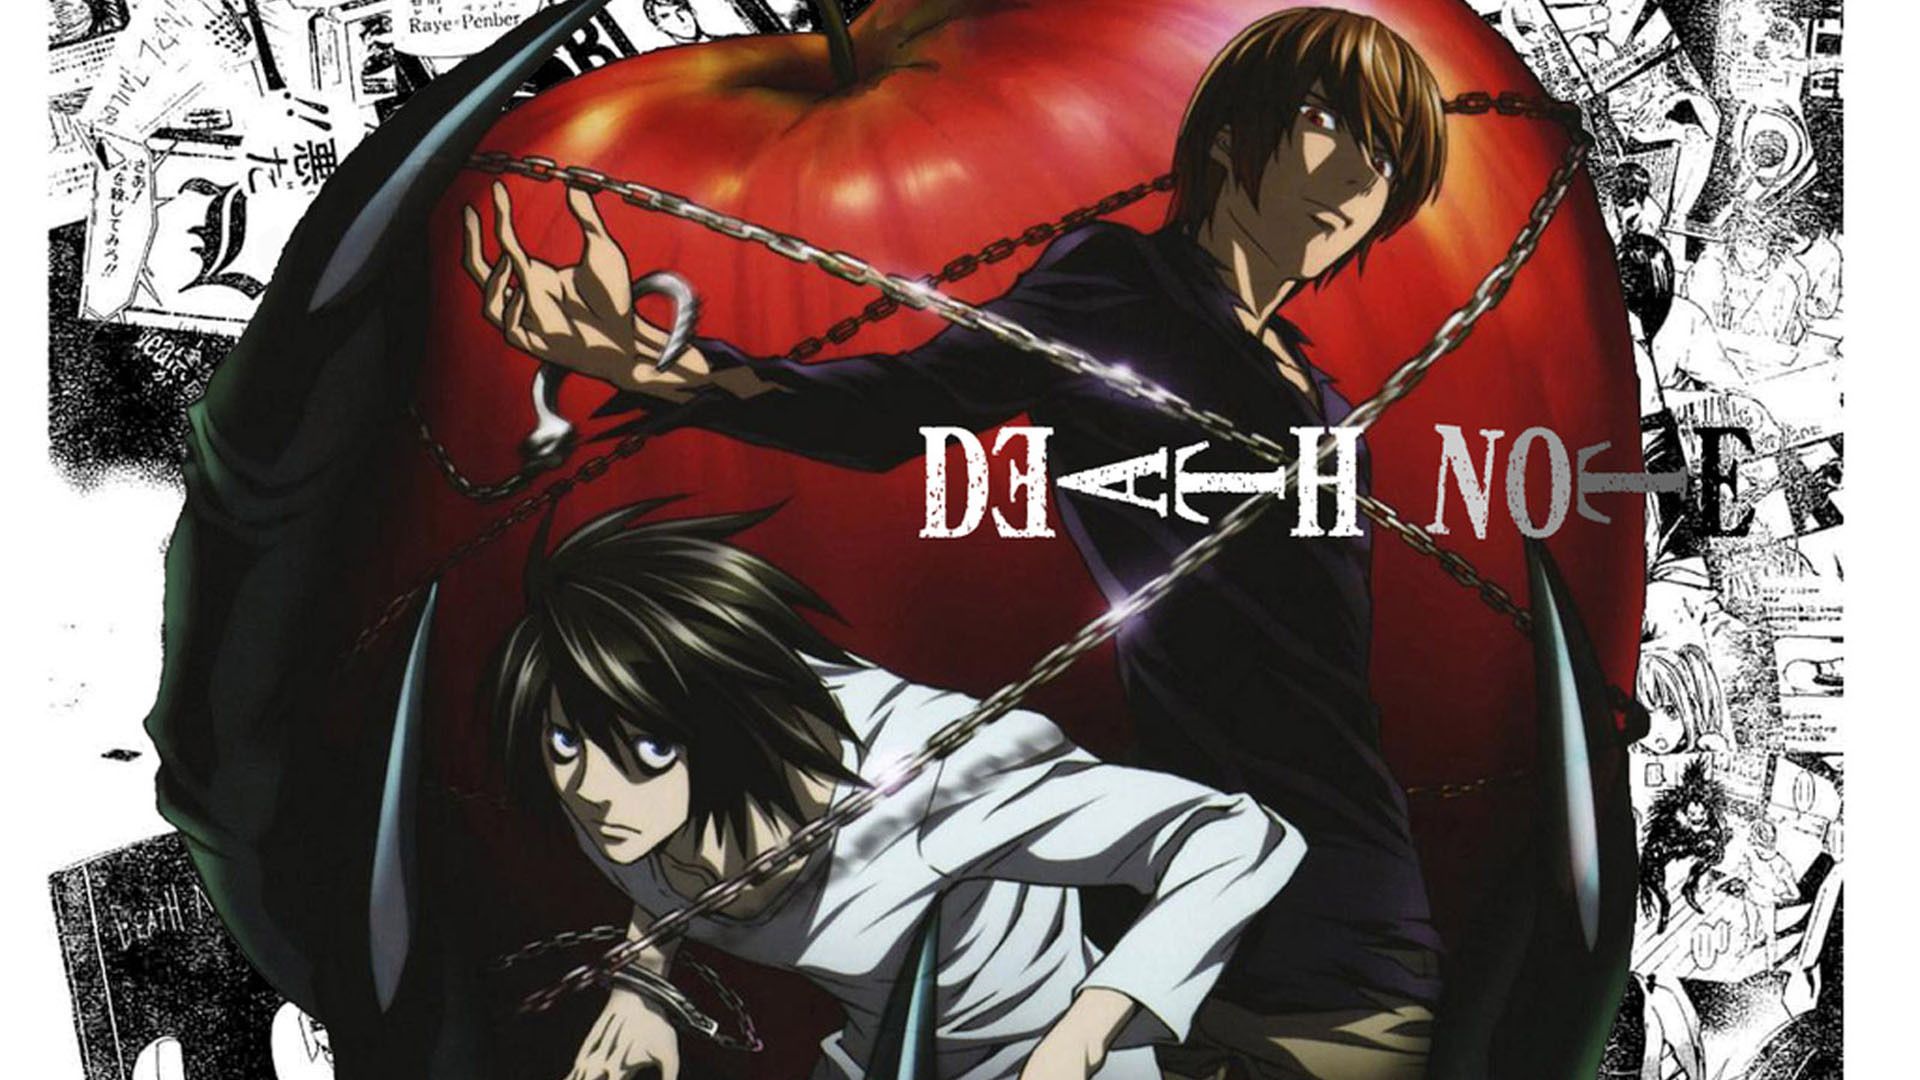 Death note anime poster design : r/PosterArt